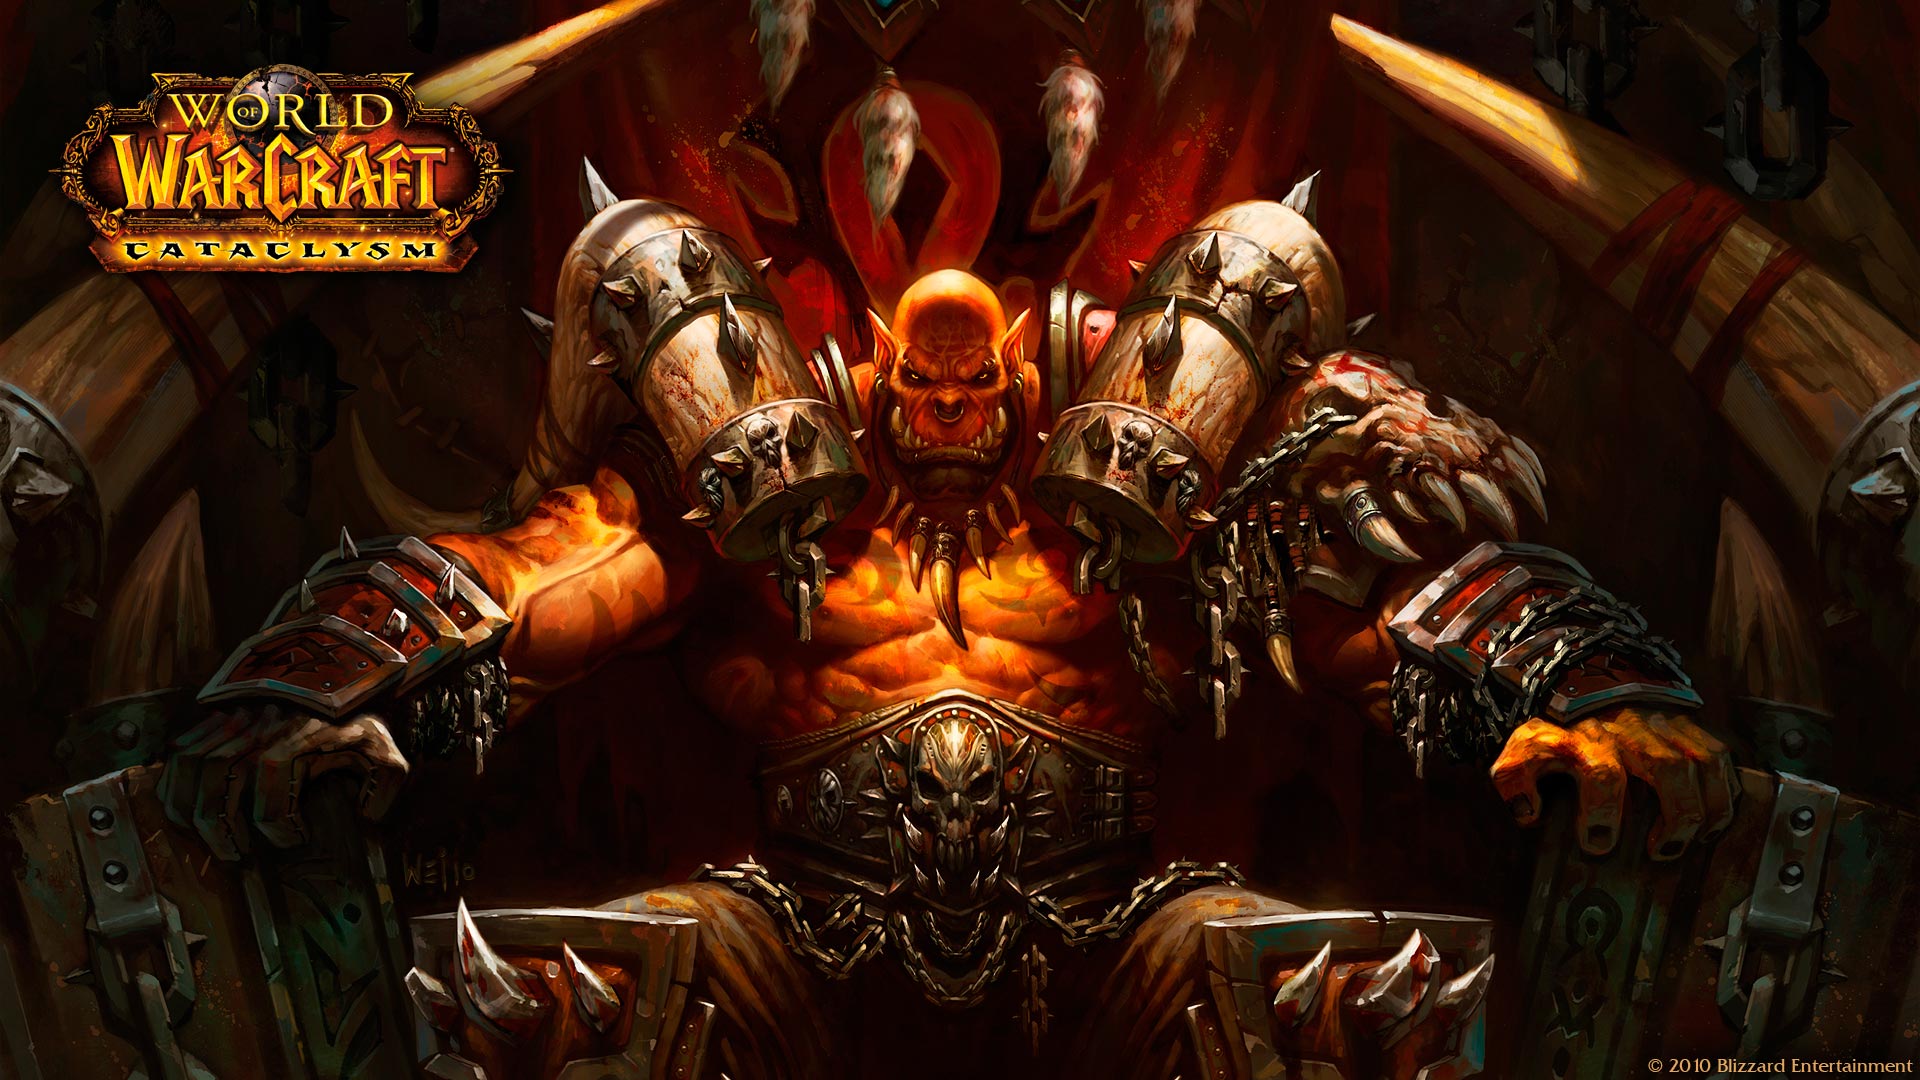  Thomas Tull ha hablado sobre la pelcula de World of Warcraft